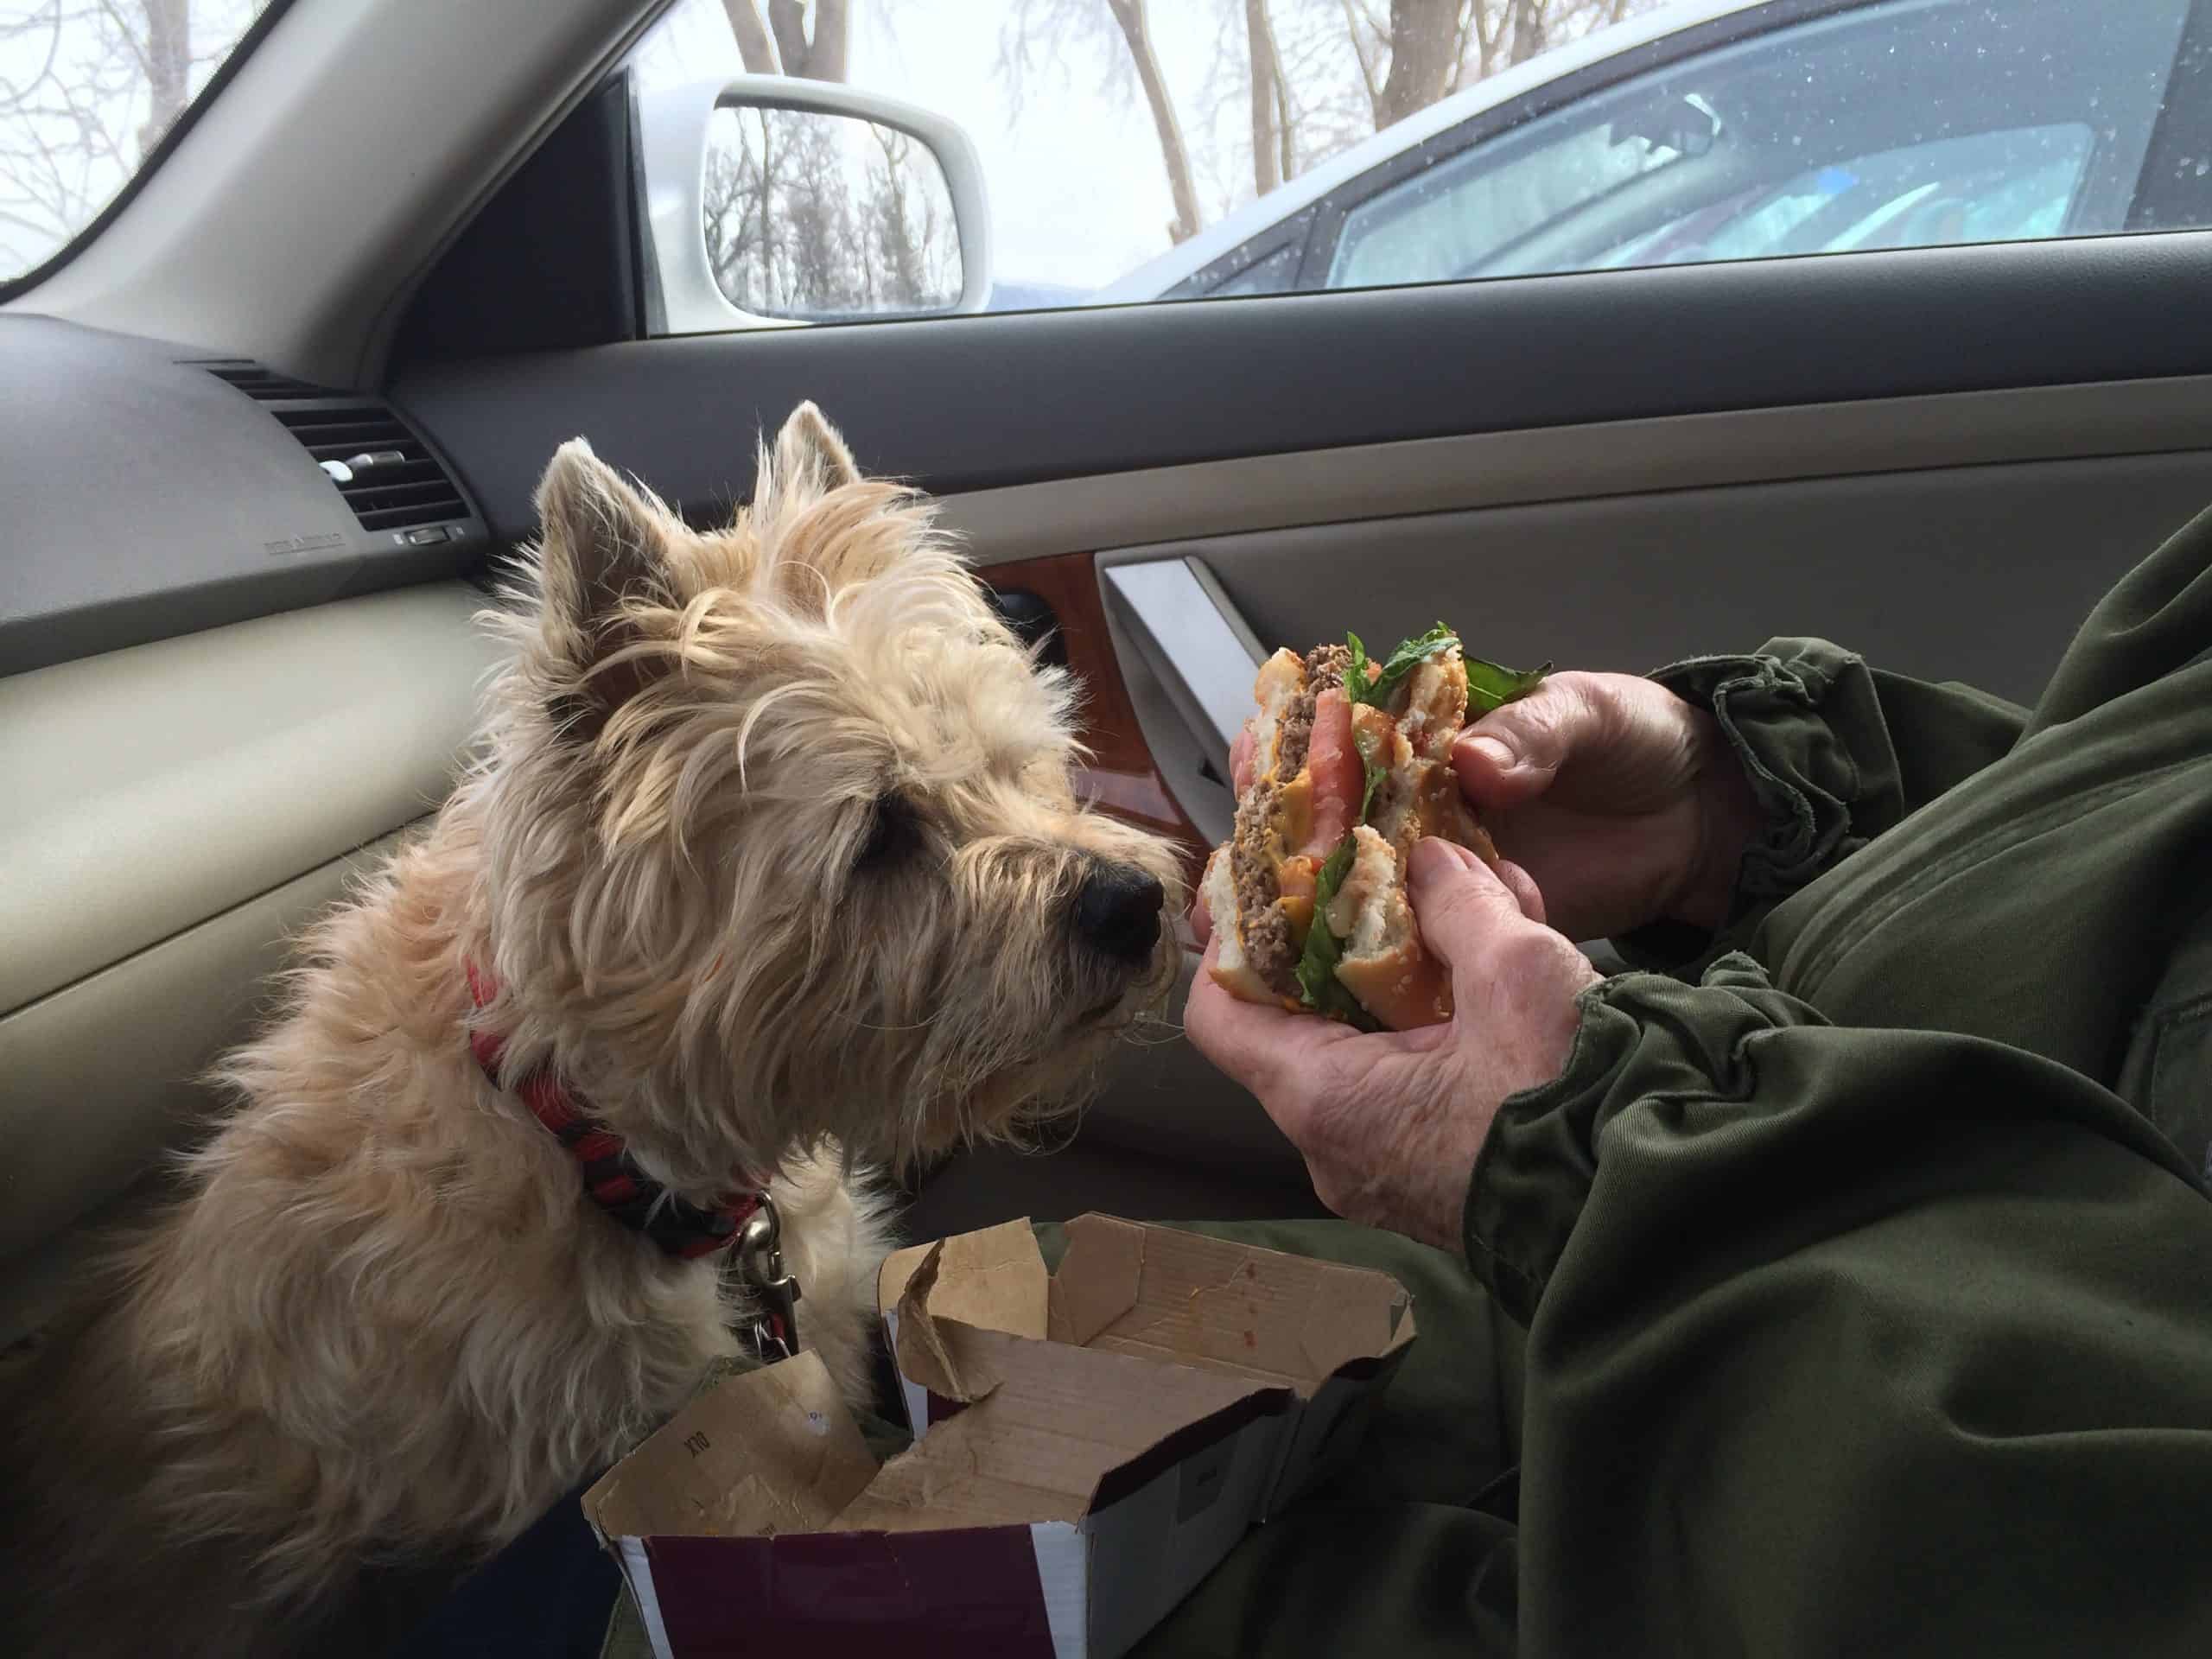 Cairn-Terrier-Looking at Delicious Hamburger